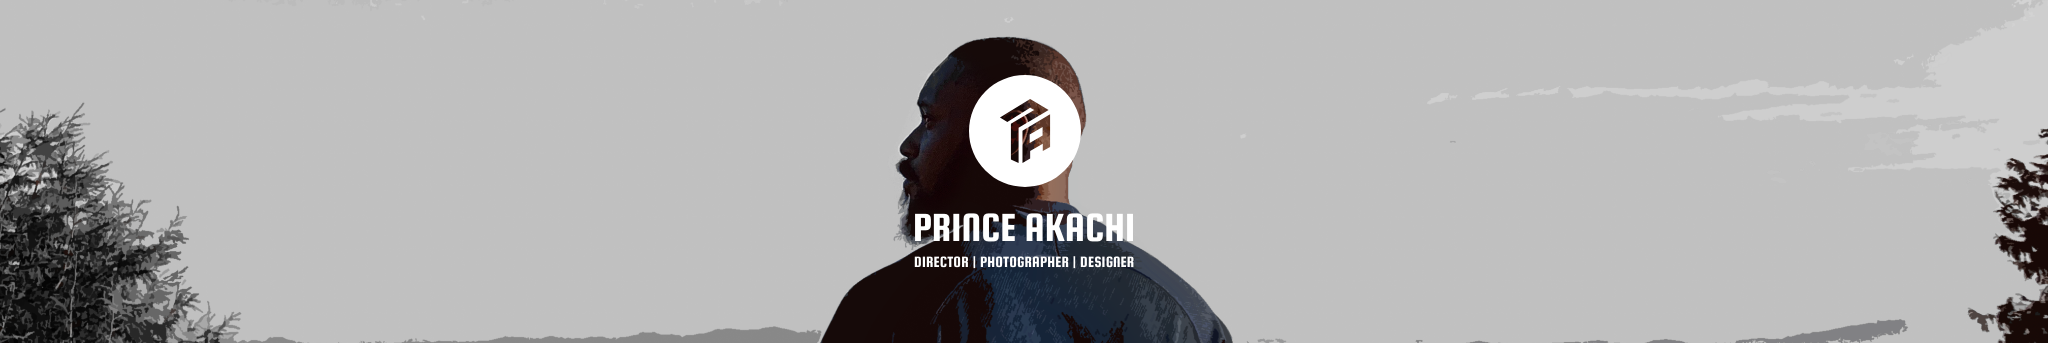 Prince Akachi's profile banner